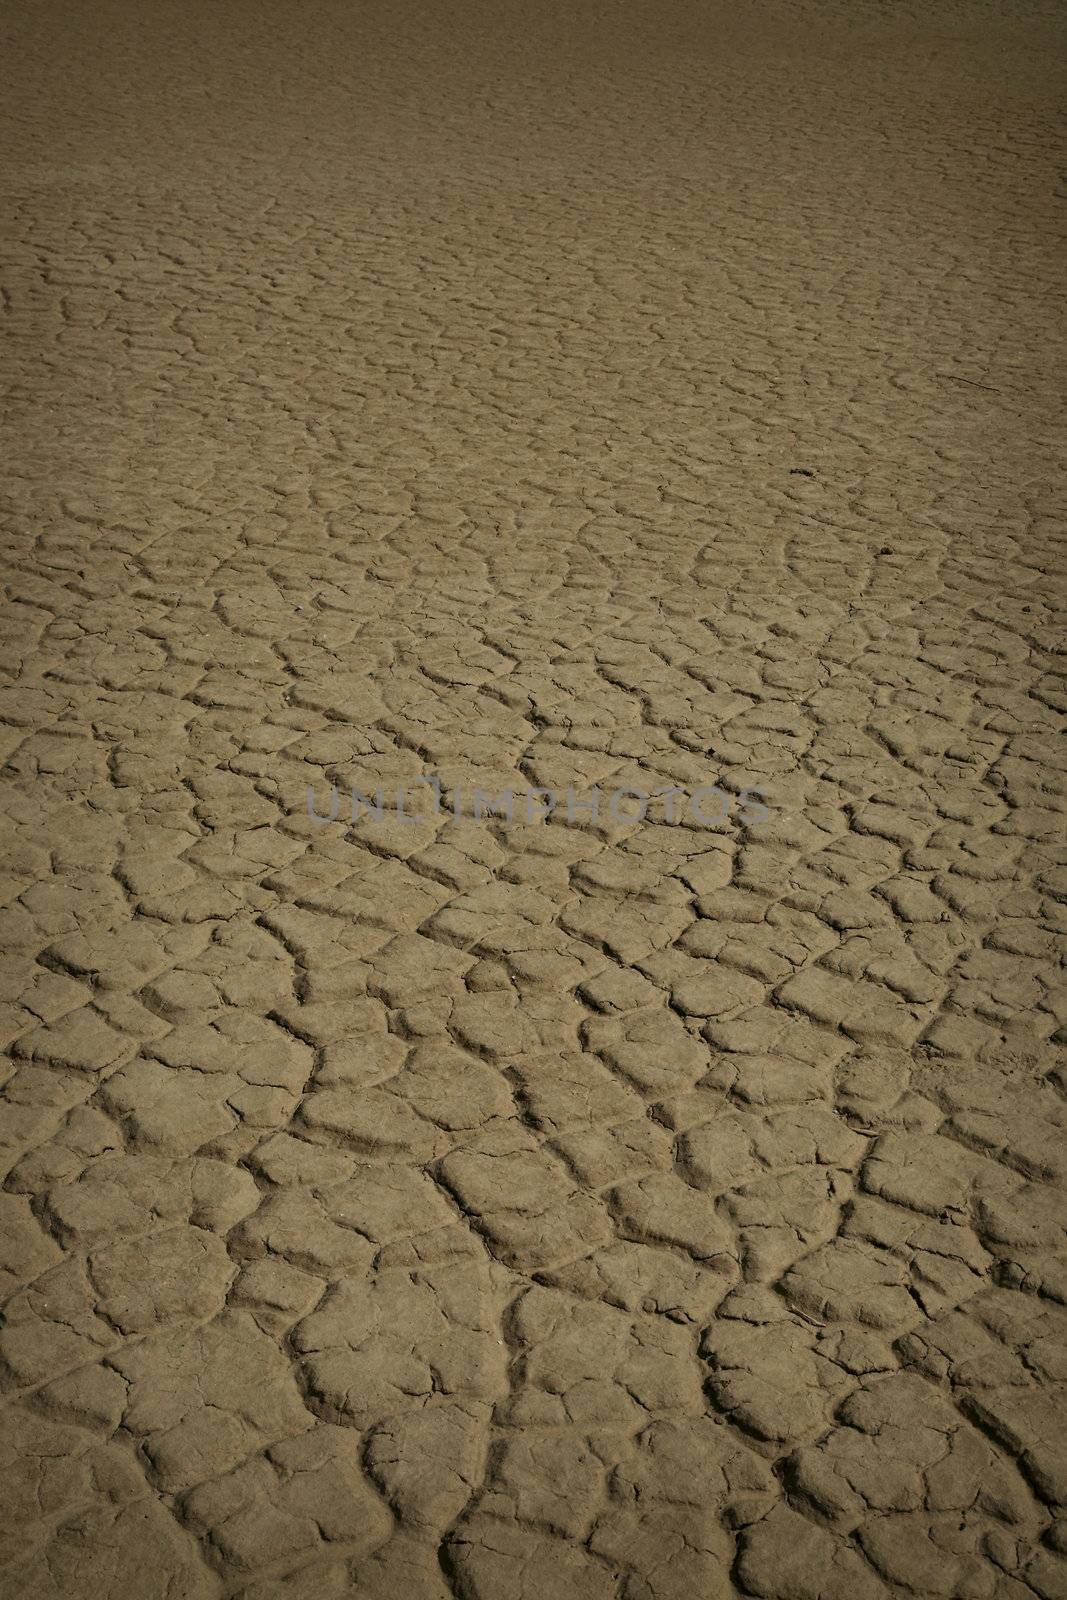 dry soil by RainerPlendl